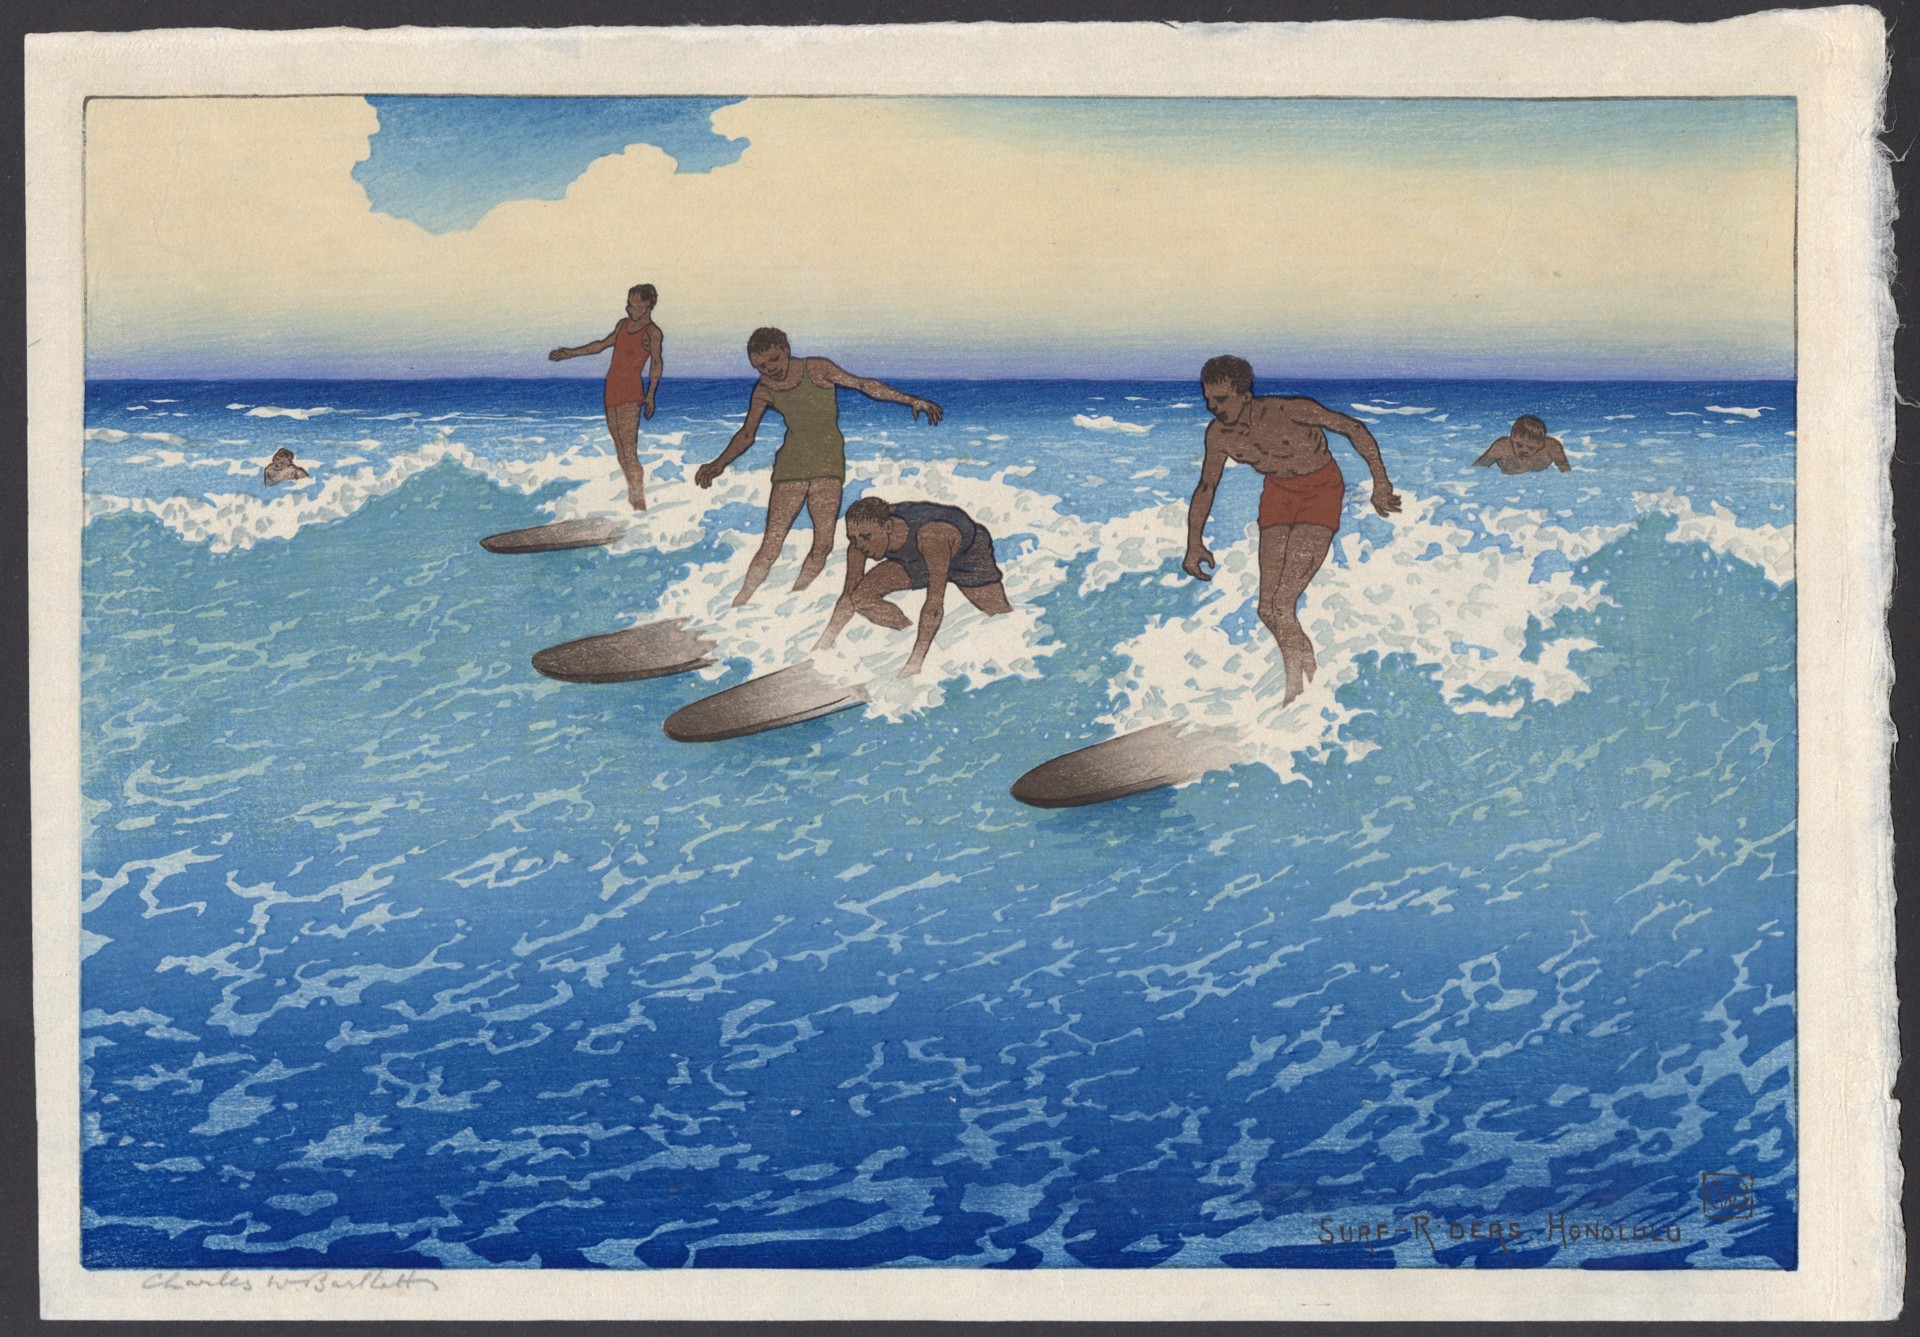 Surfriders, Honolulu by Charles Bartlett